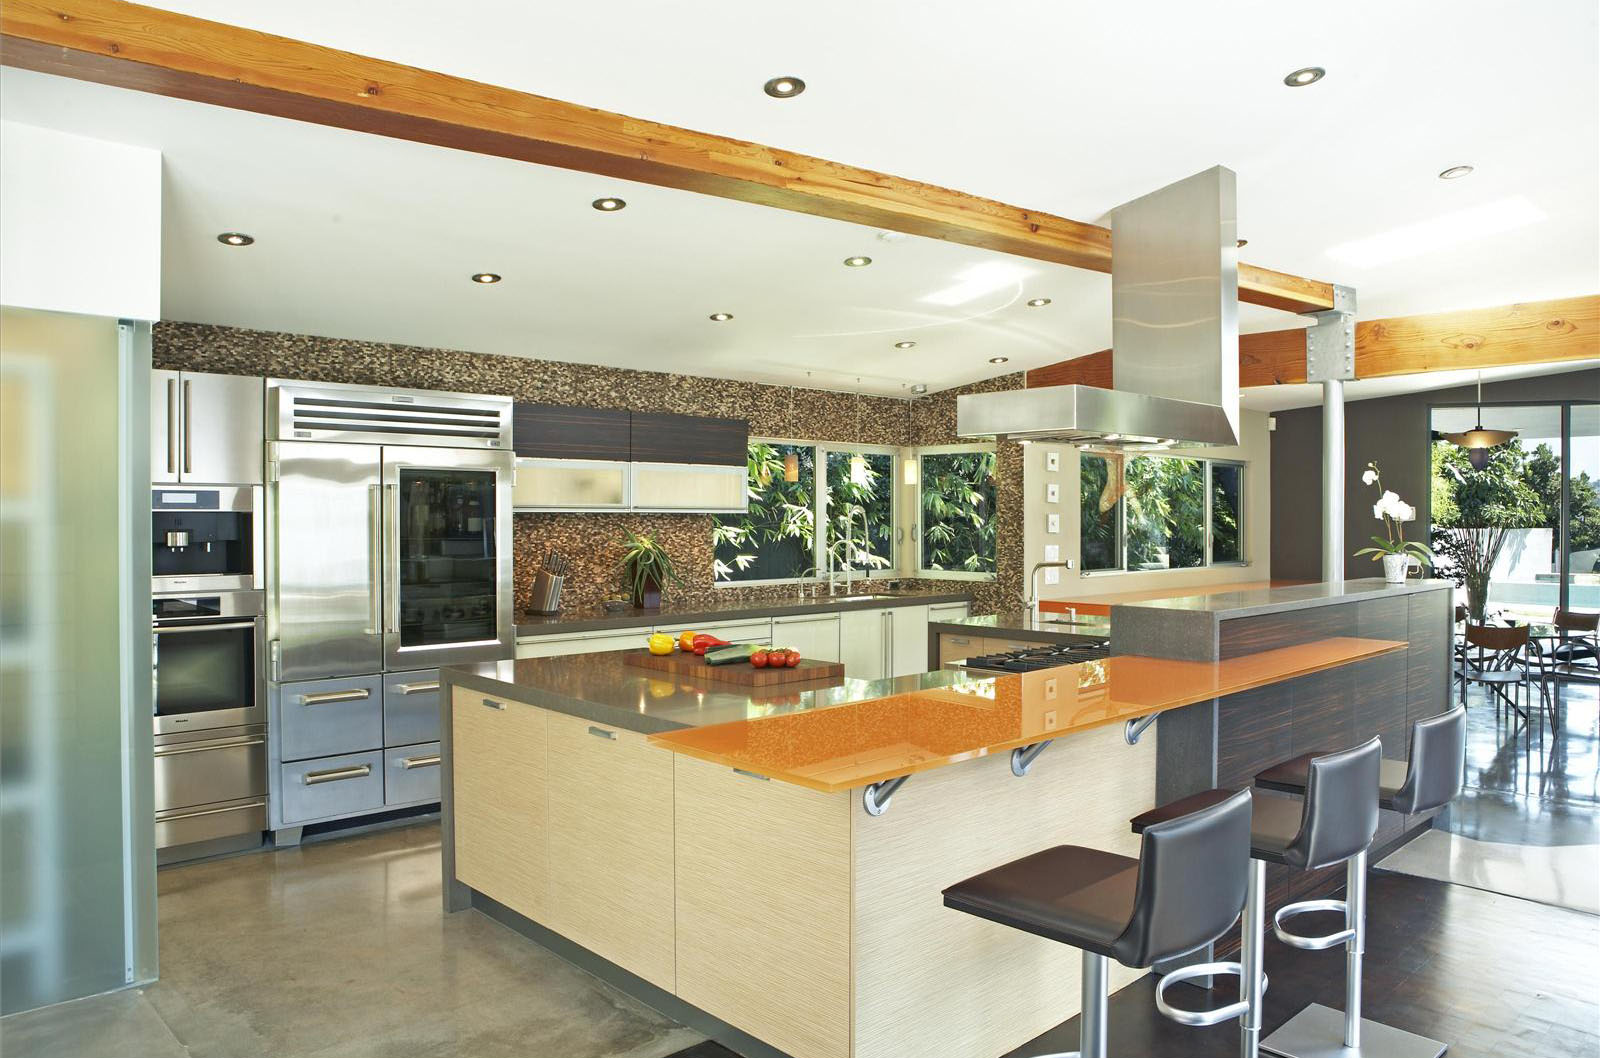 long open kitchen design